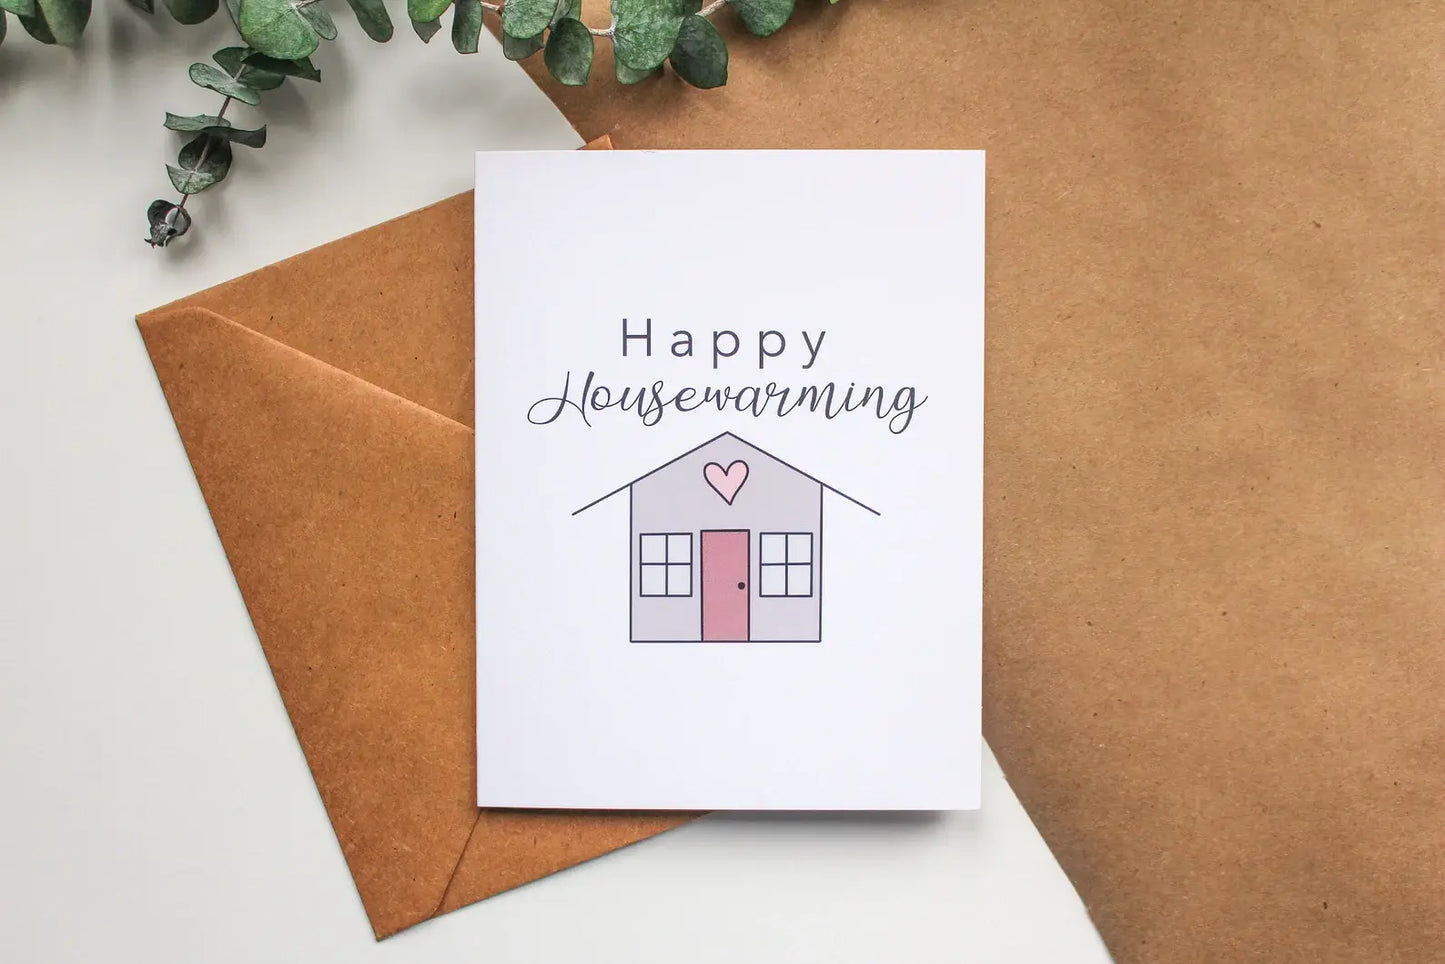 Happy Housewarming - New Home Greeting Card